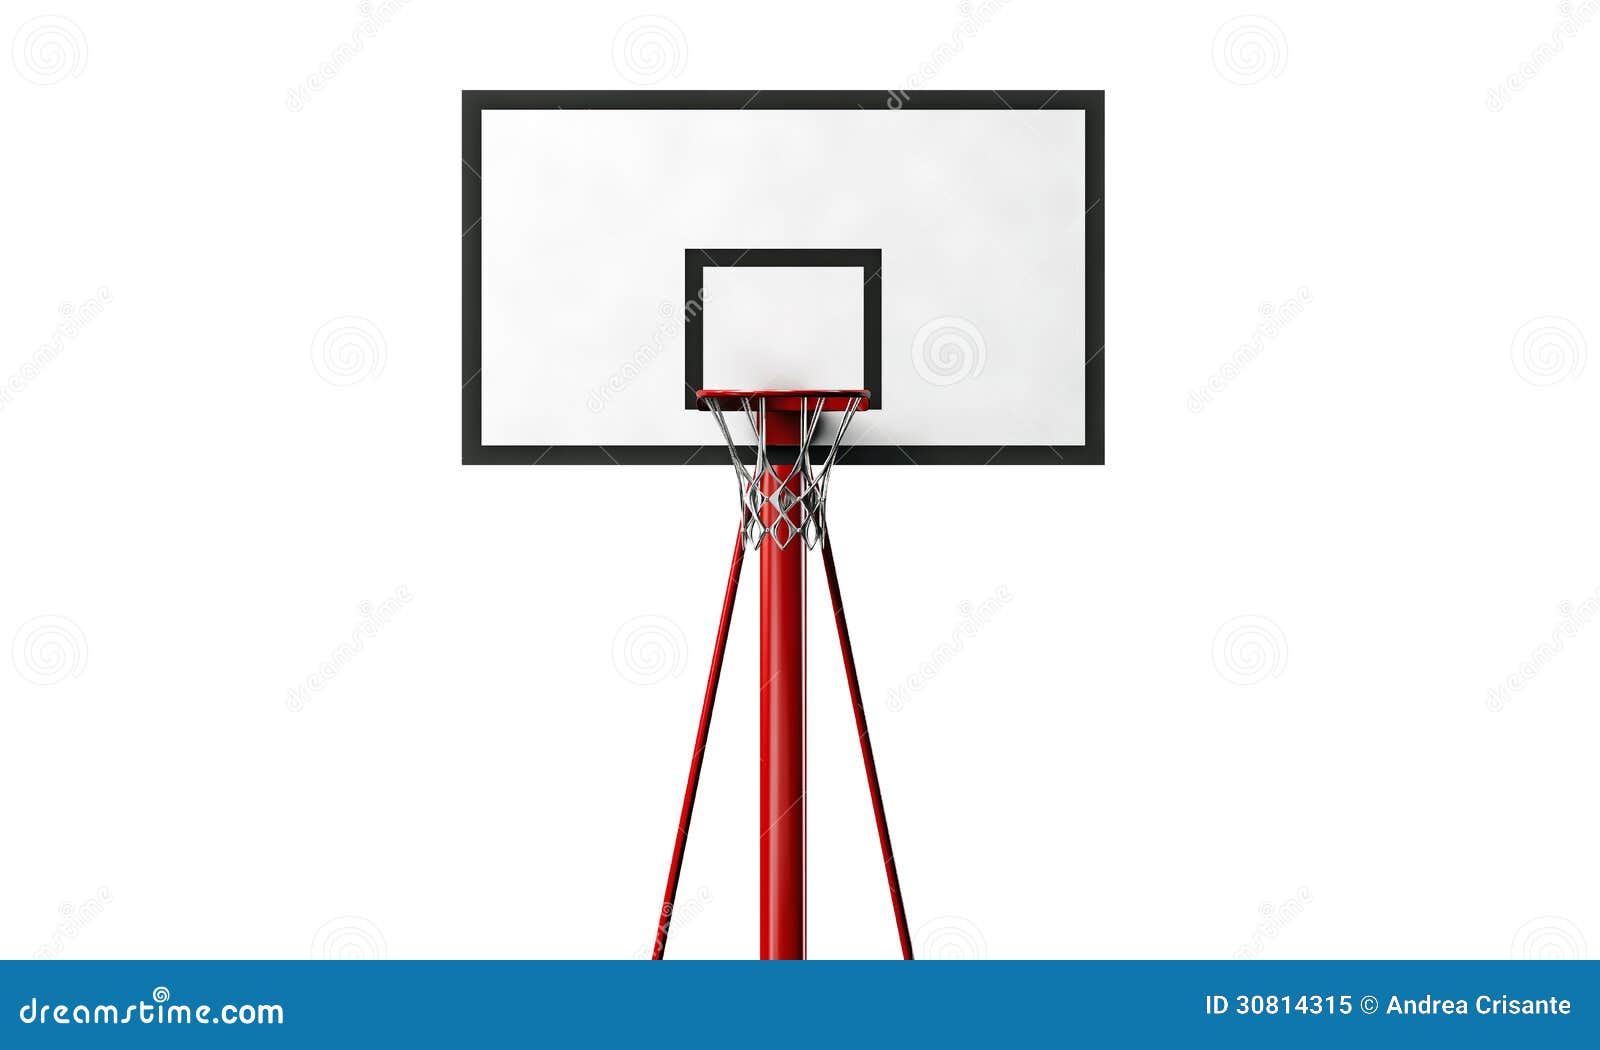 Basketball hoop stock illustration. Illustration of athletics - 30814315